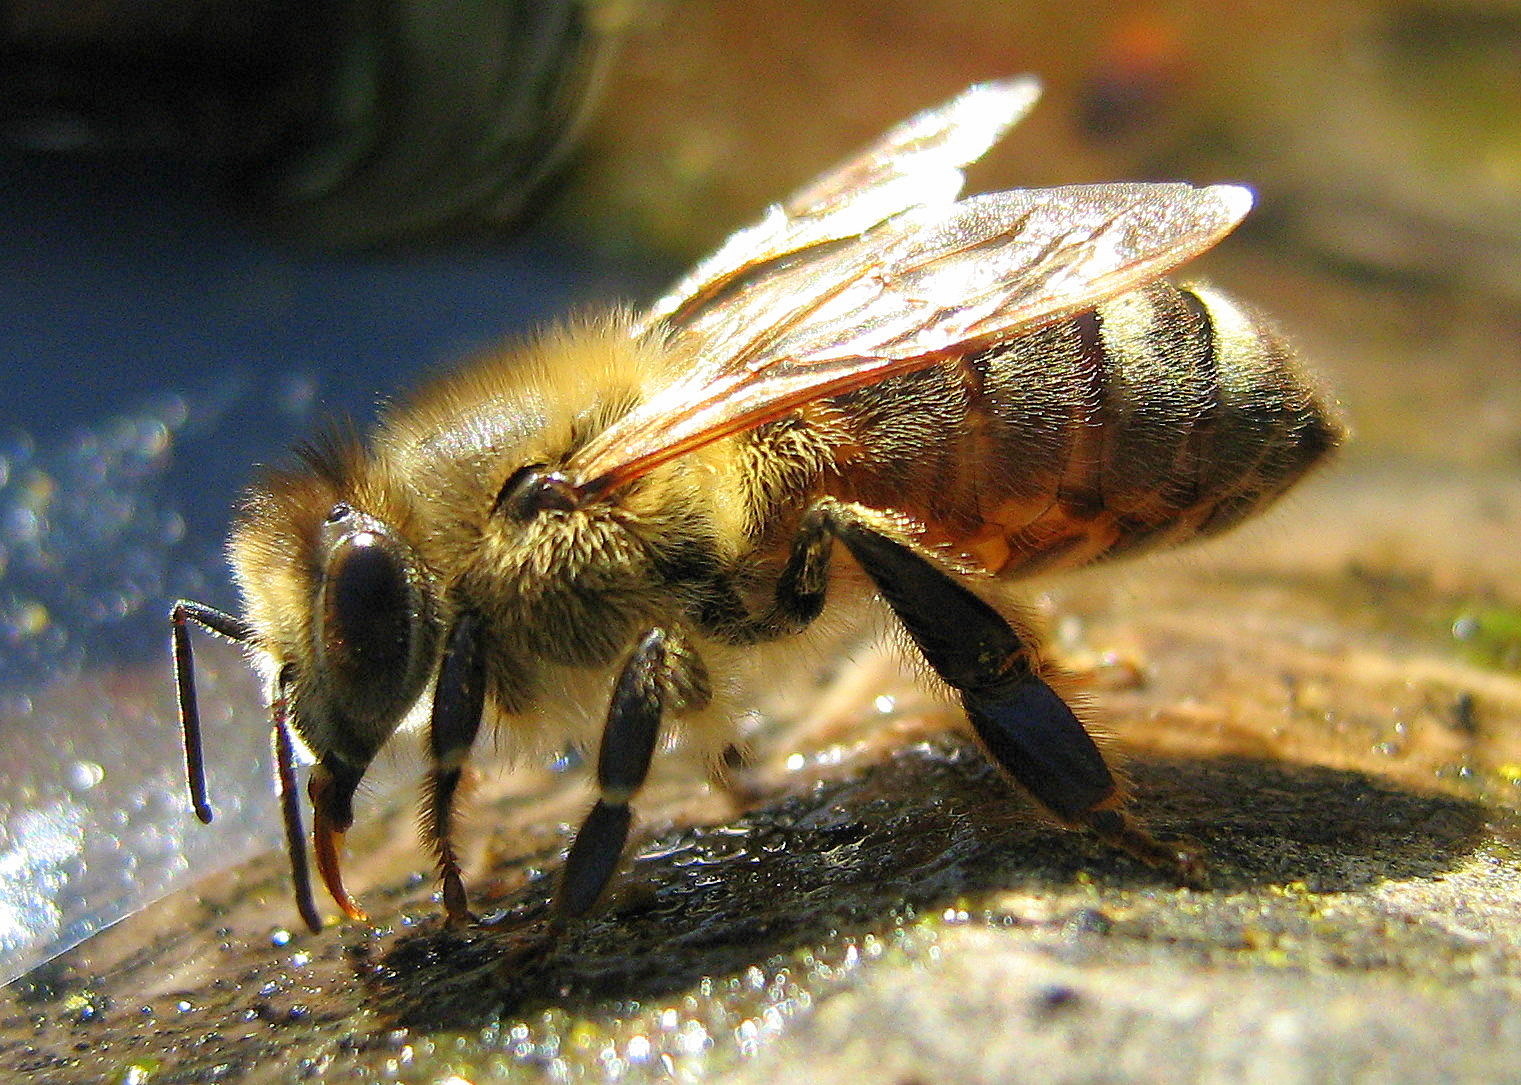 Honeybee drinking water